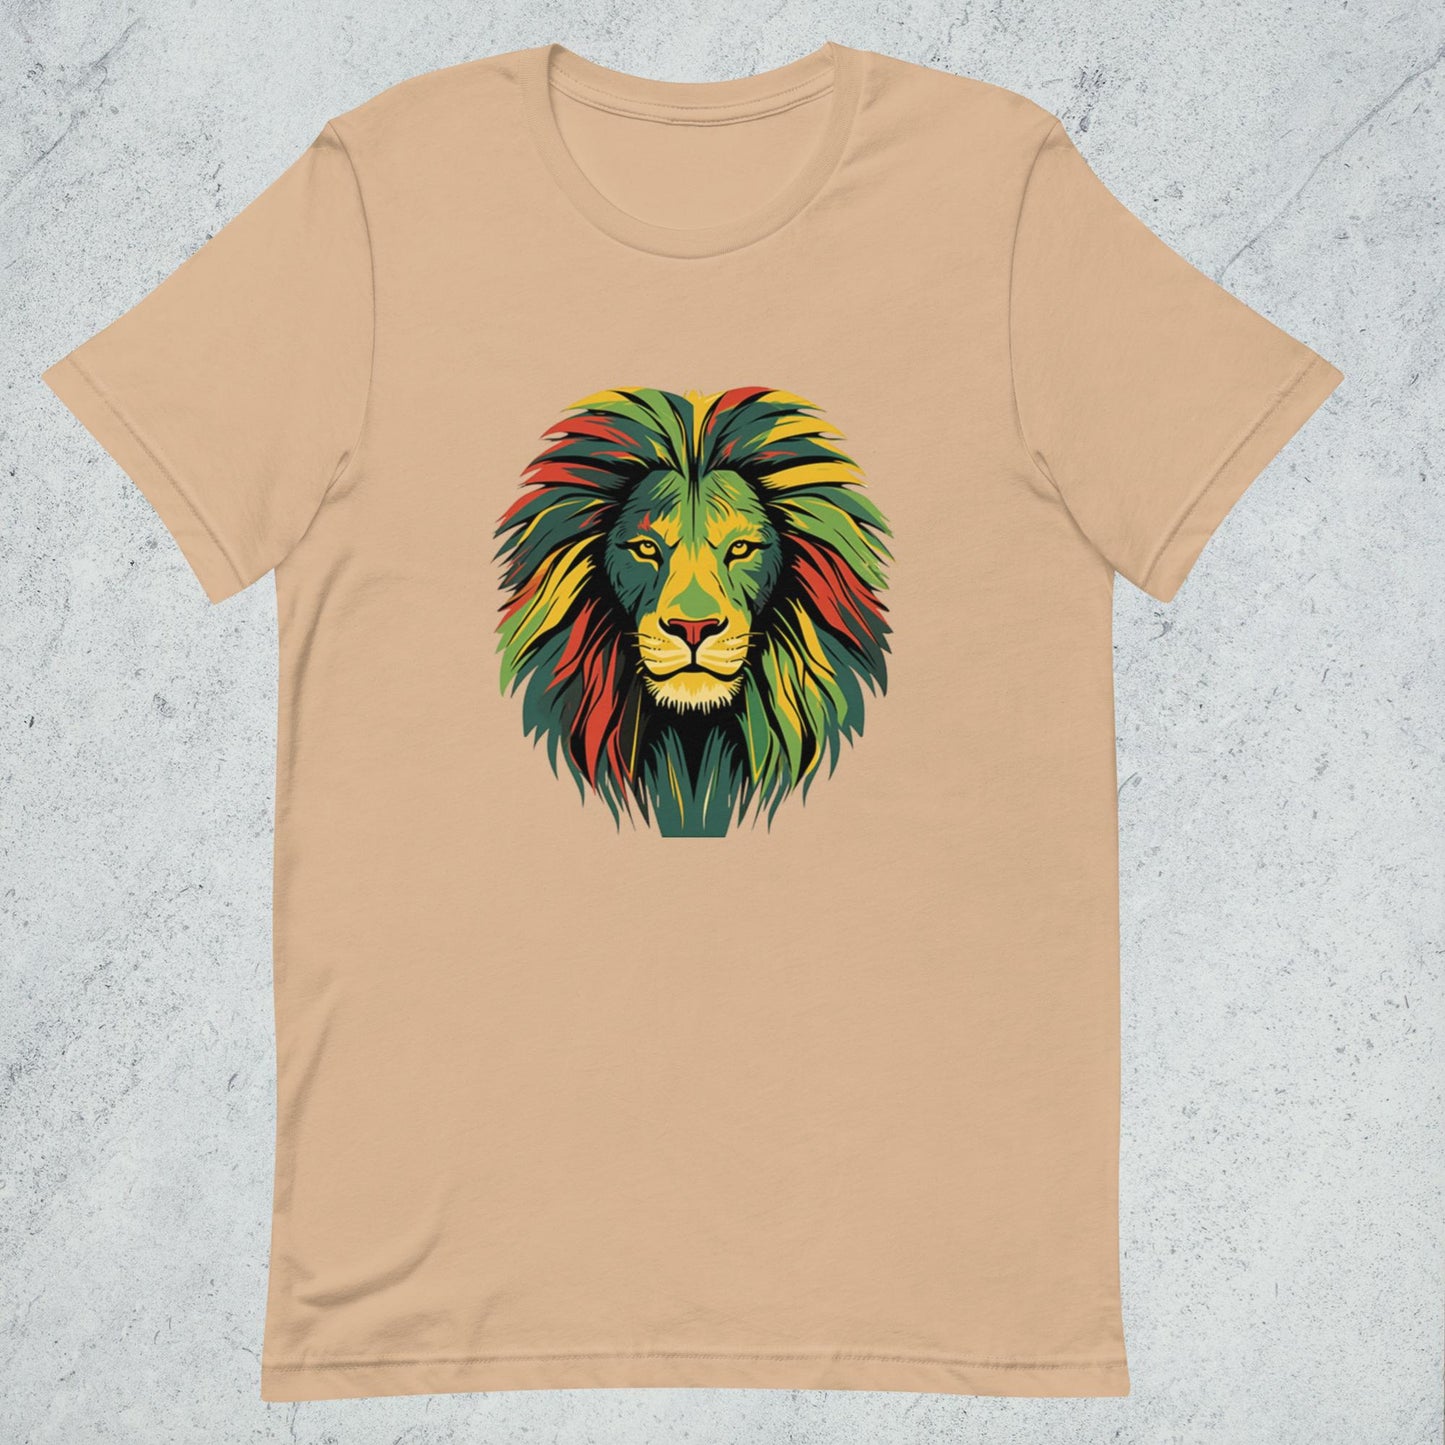 'THEE LION': Unisex t-shirt